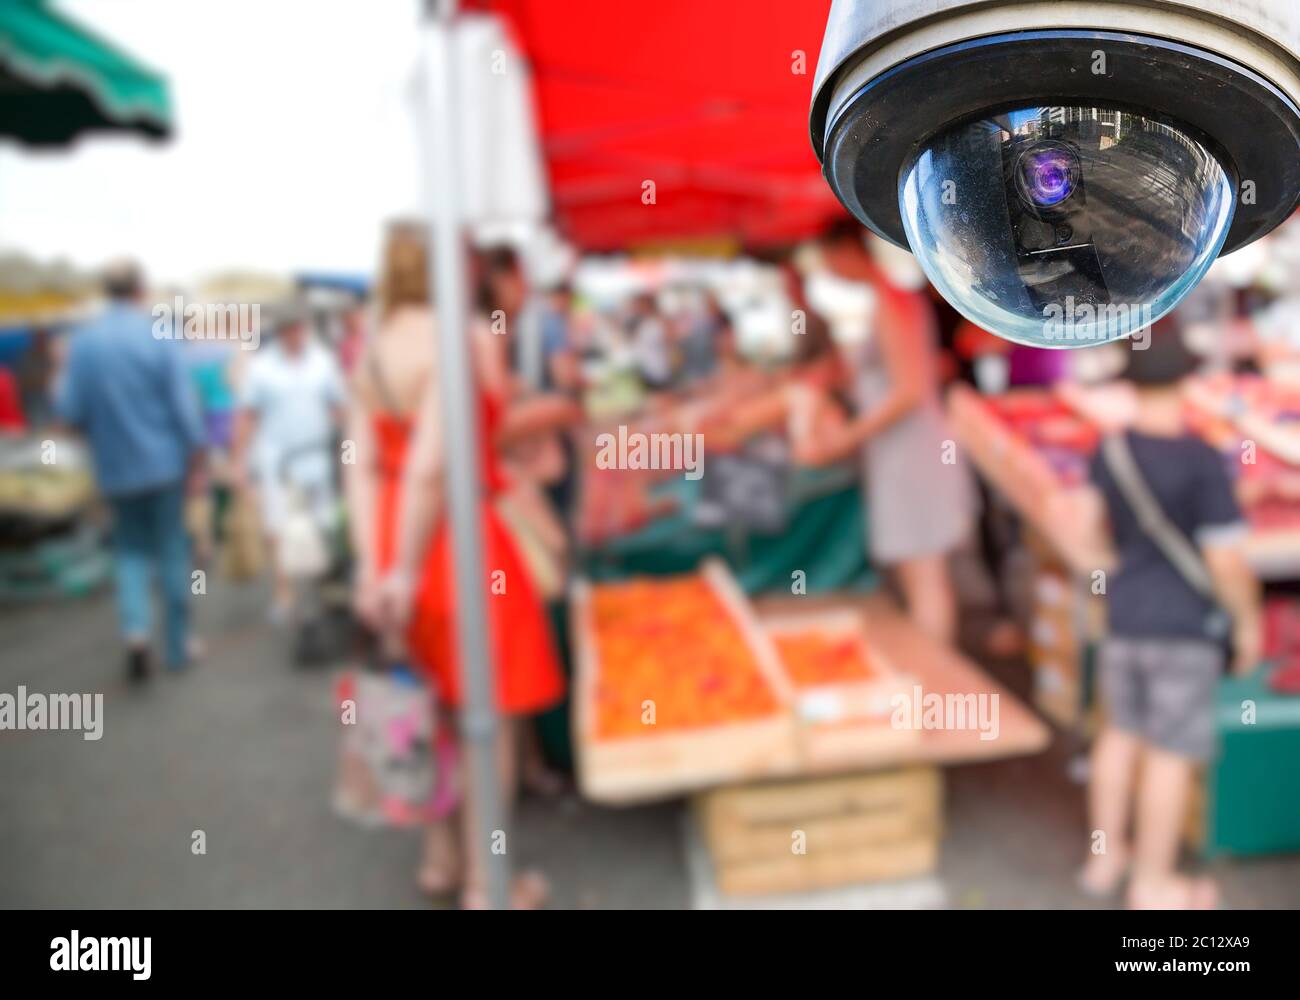 CCTV camera on local market Stock Photo